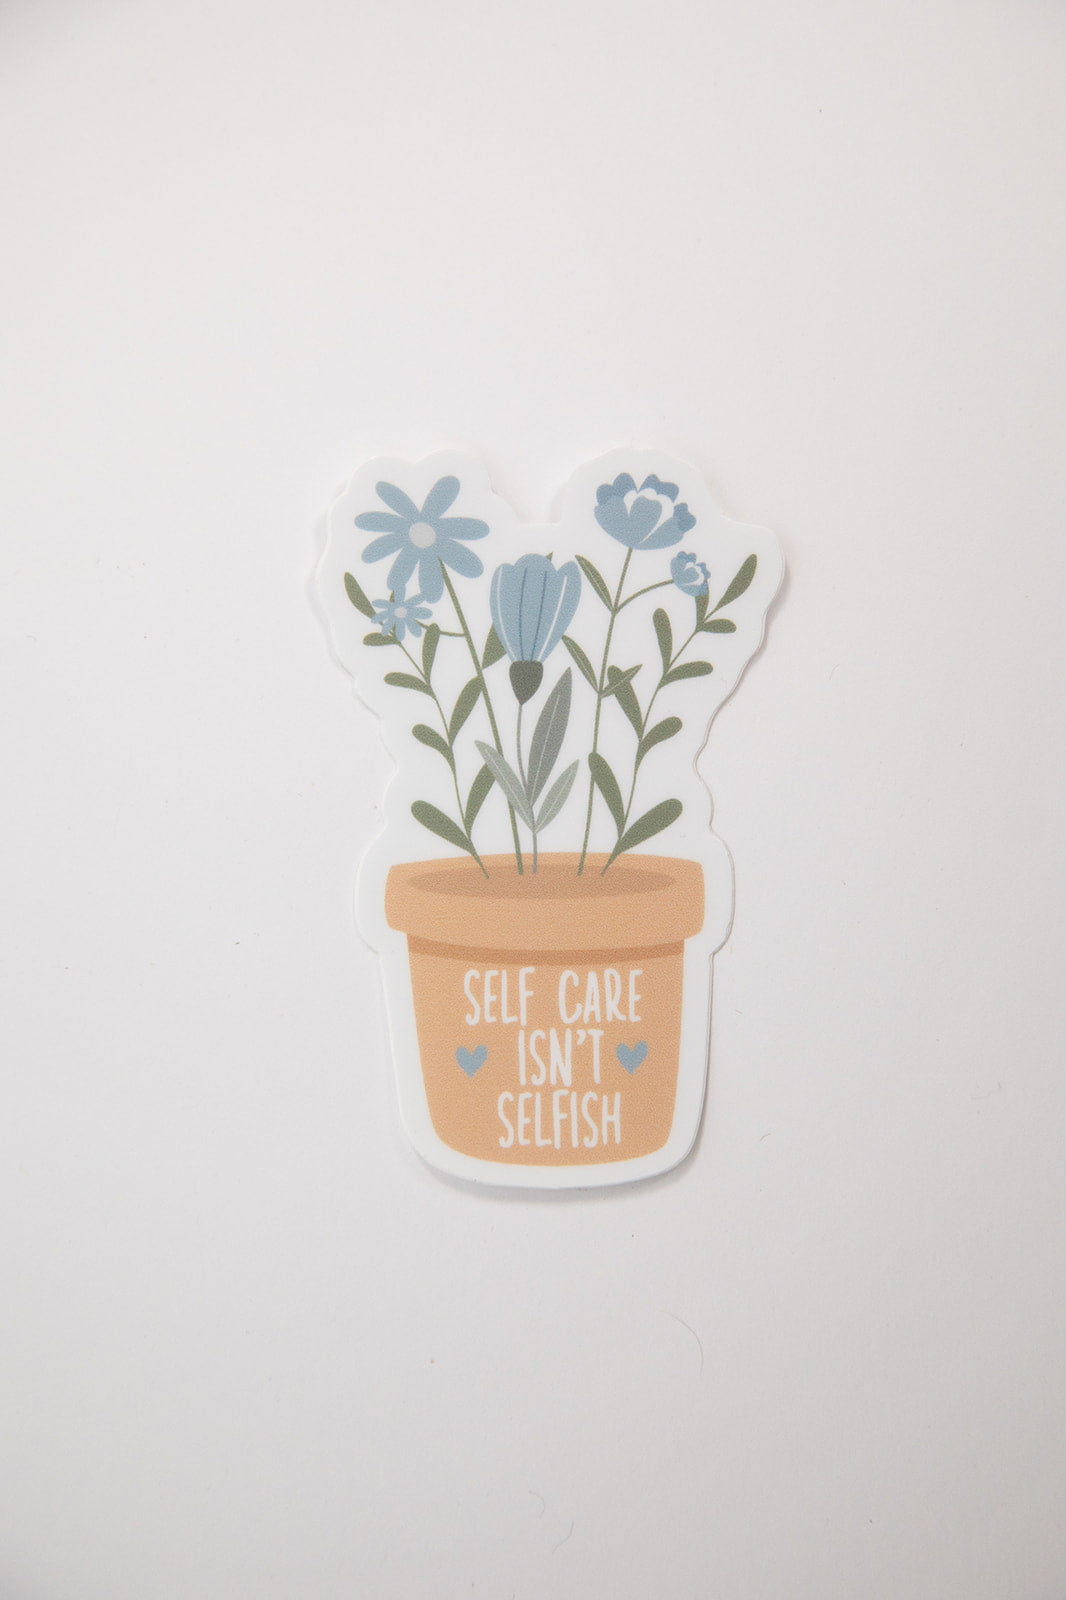 "Self Care" sticker